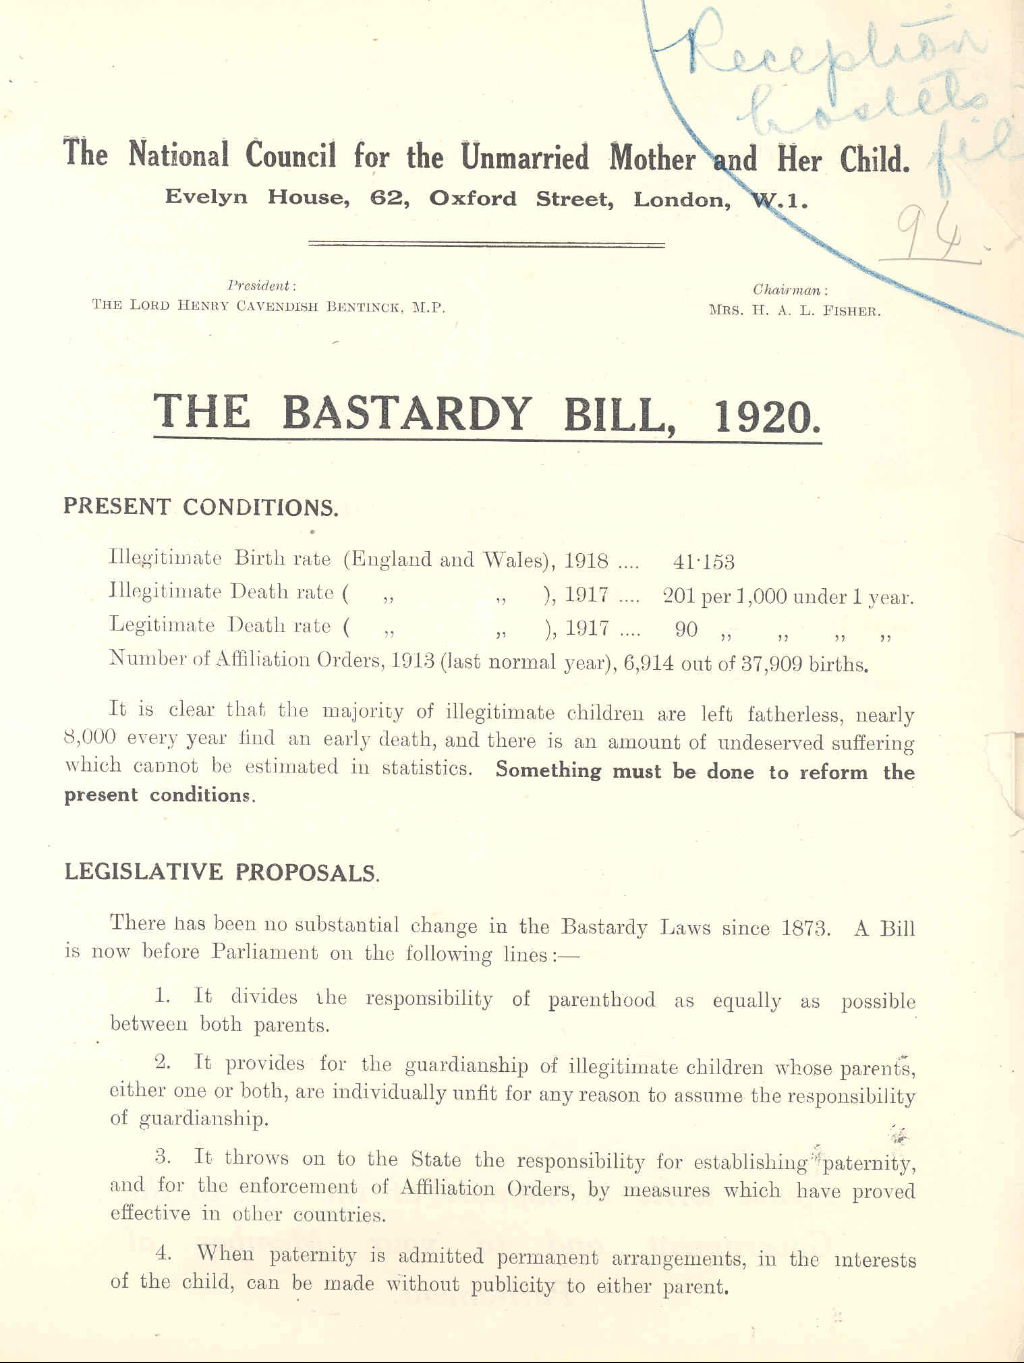 'The Bastardy Bill, 1920'